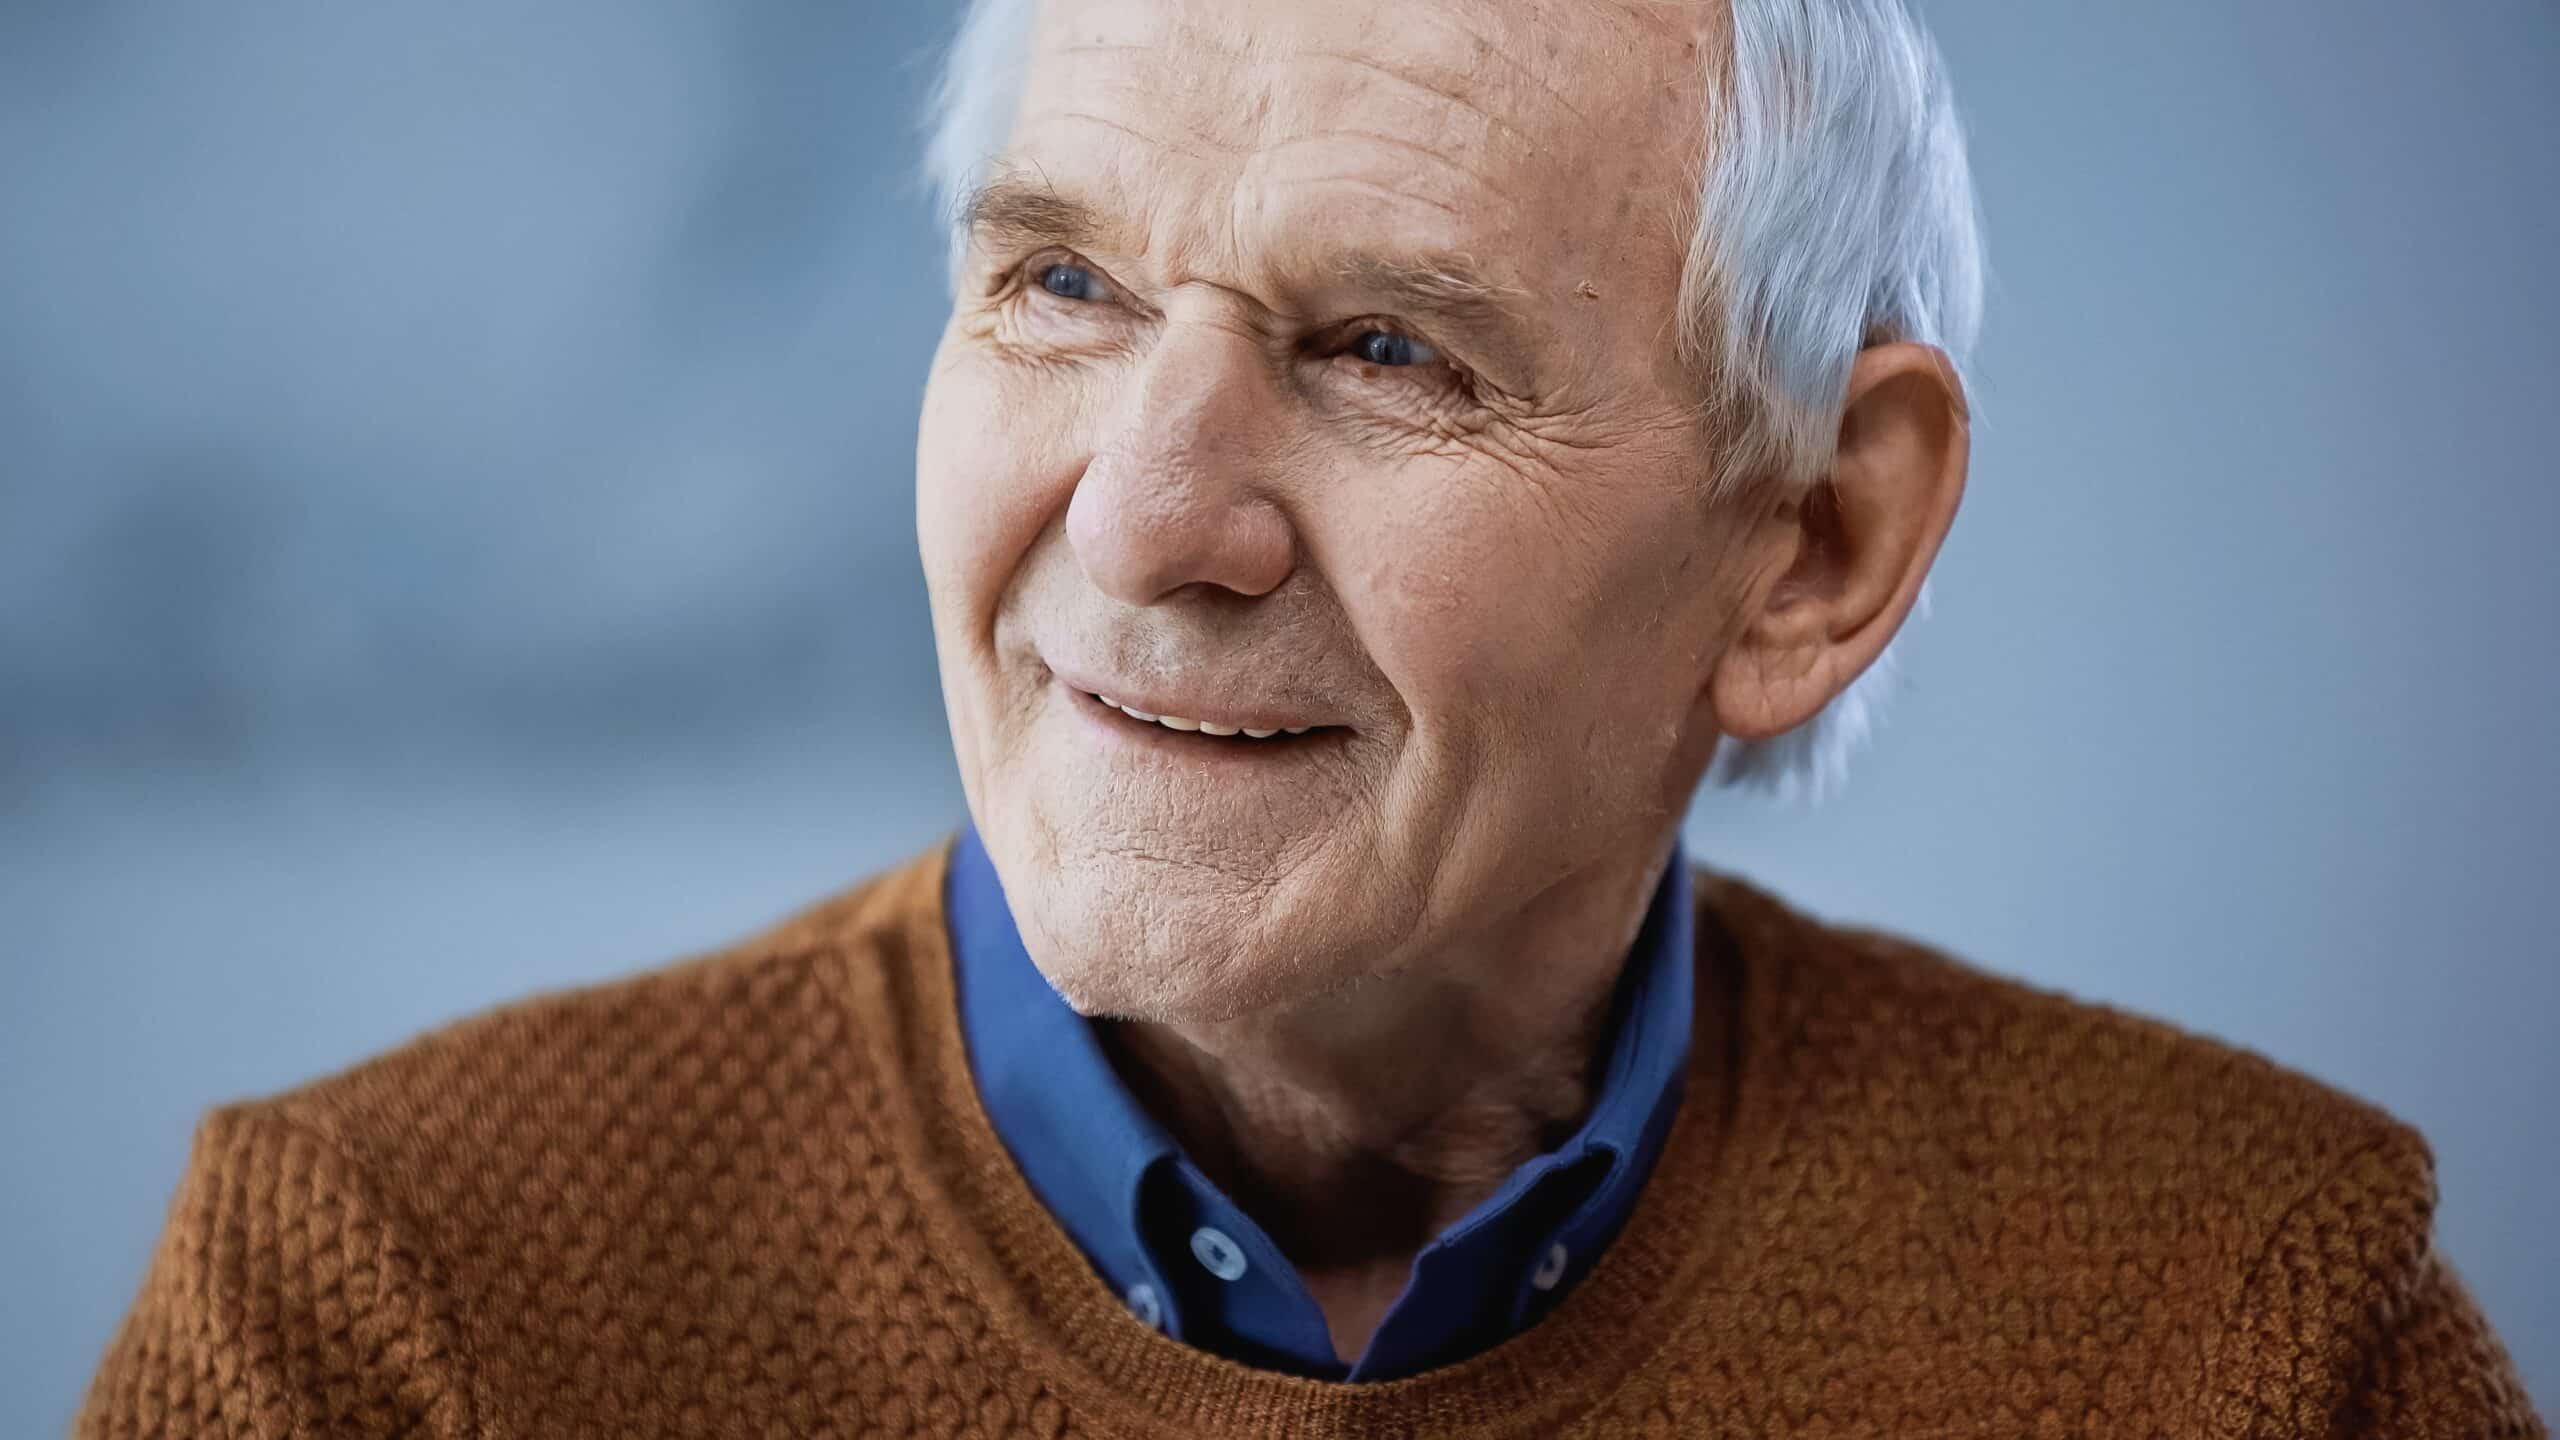 Smiling senior man portrait